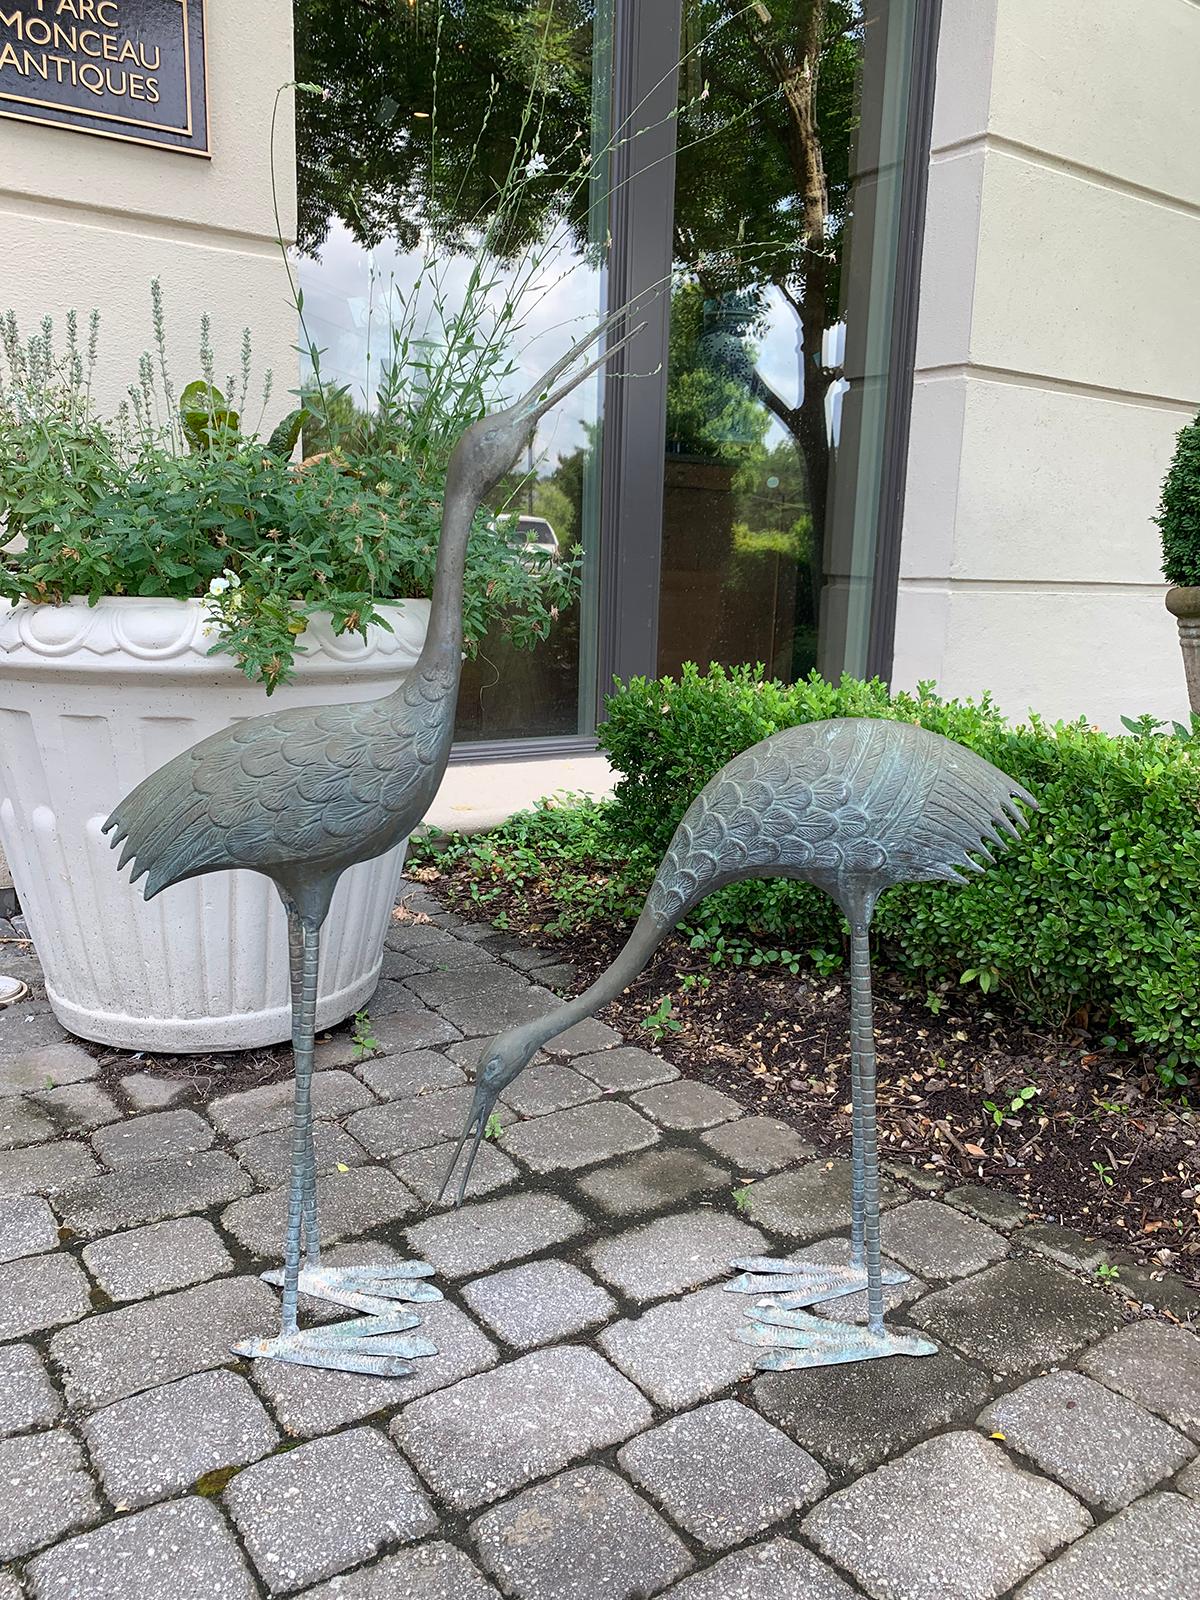 Pair of mid-20th century bronze cranes, circa 1960s
Standing crane: 21